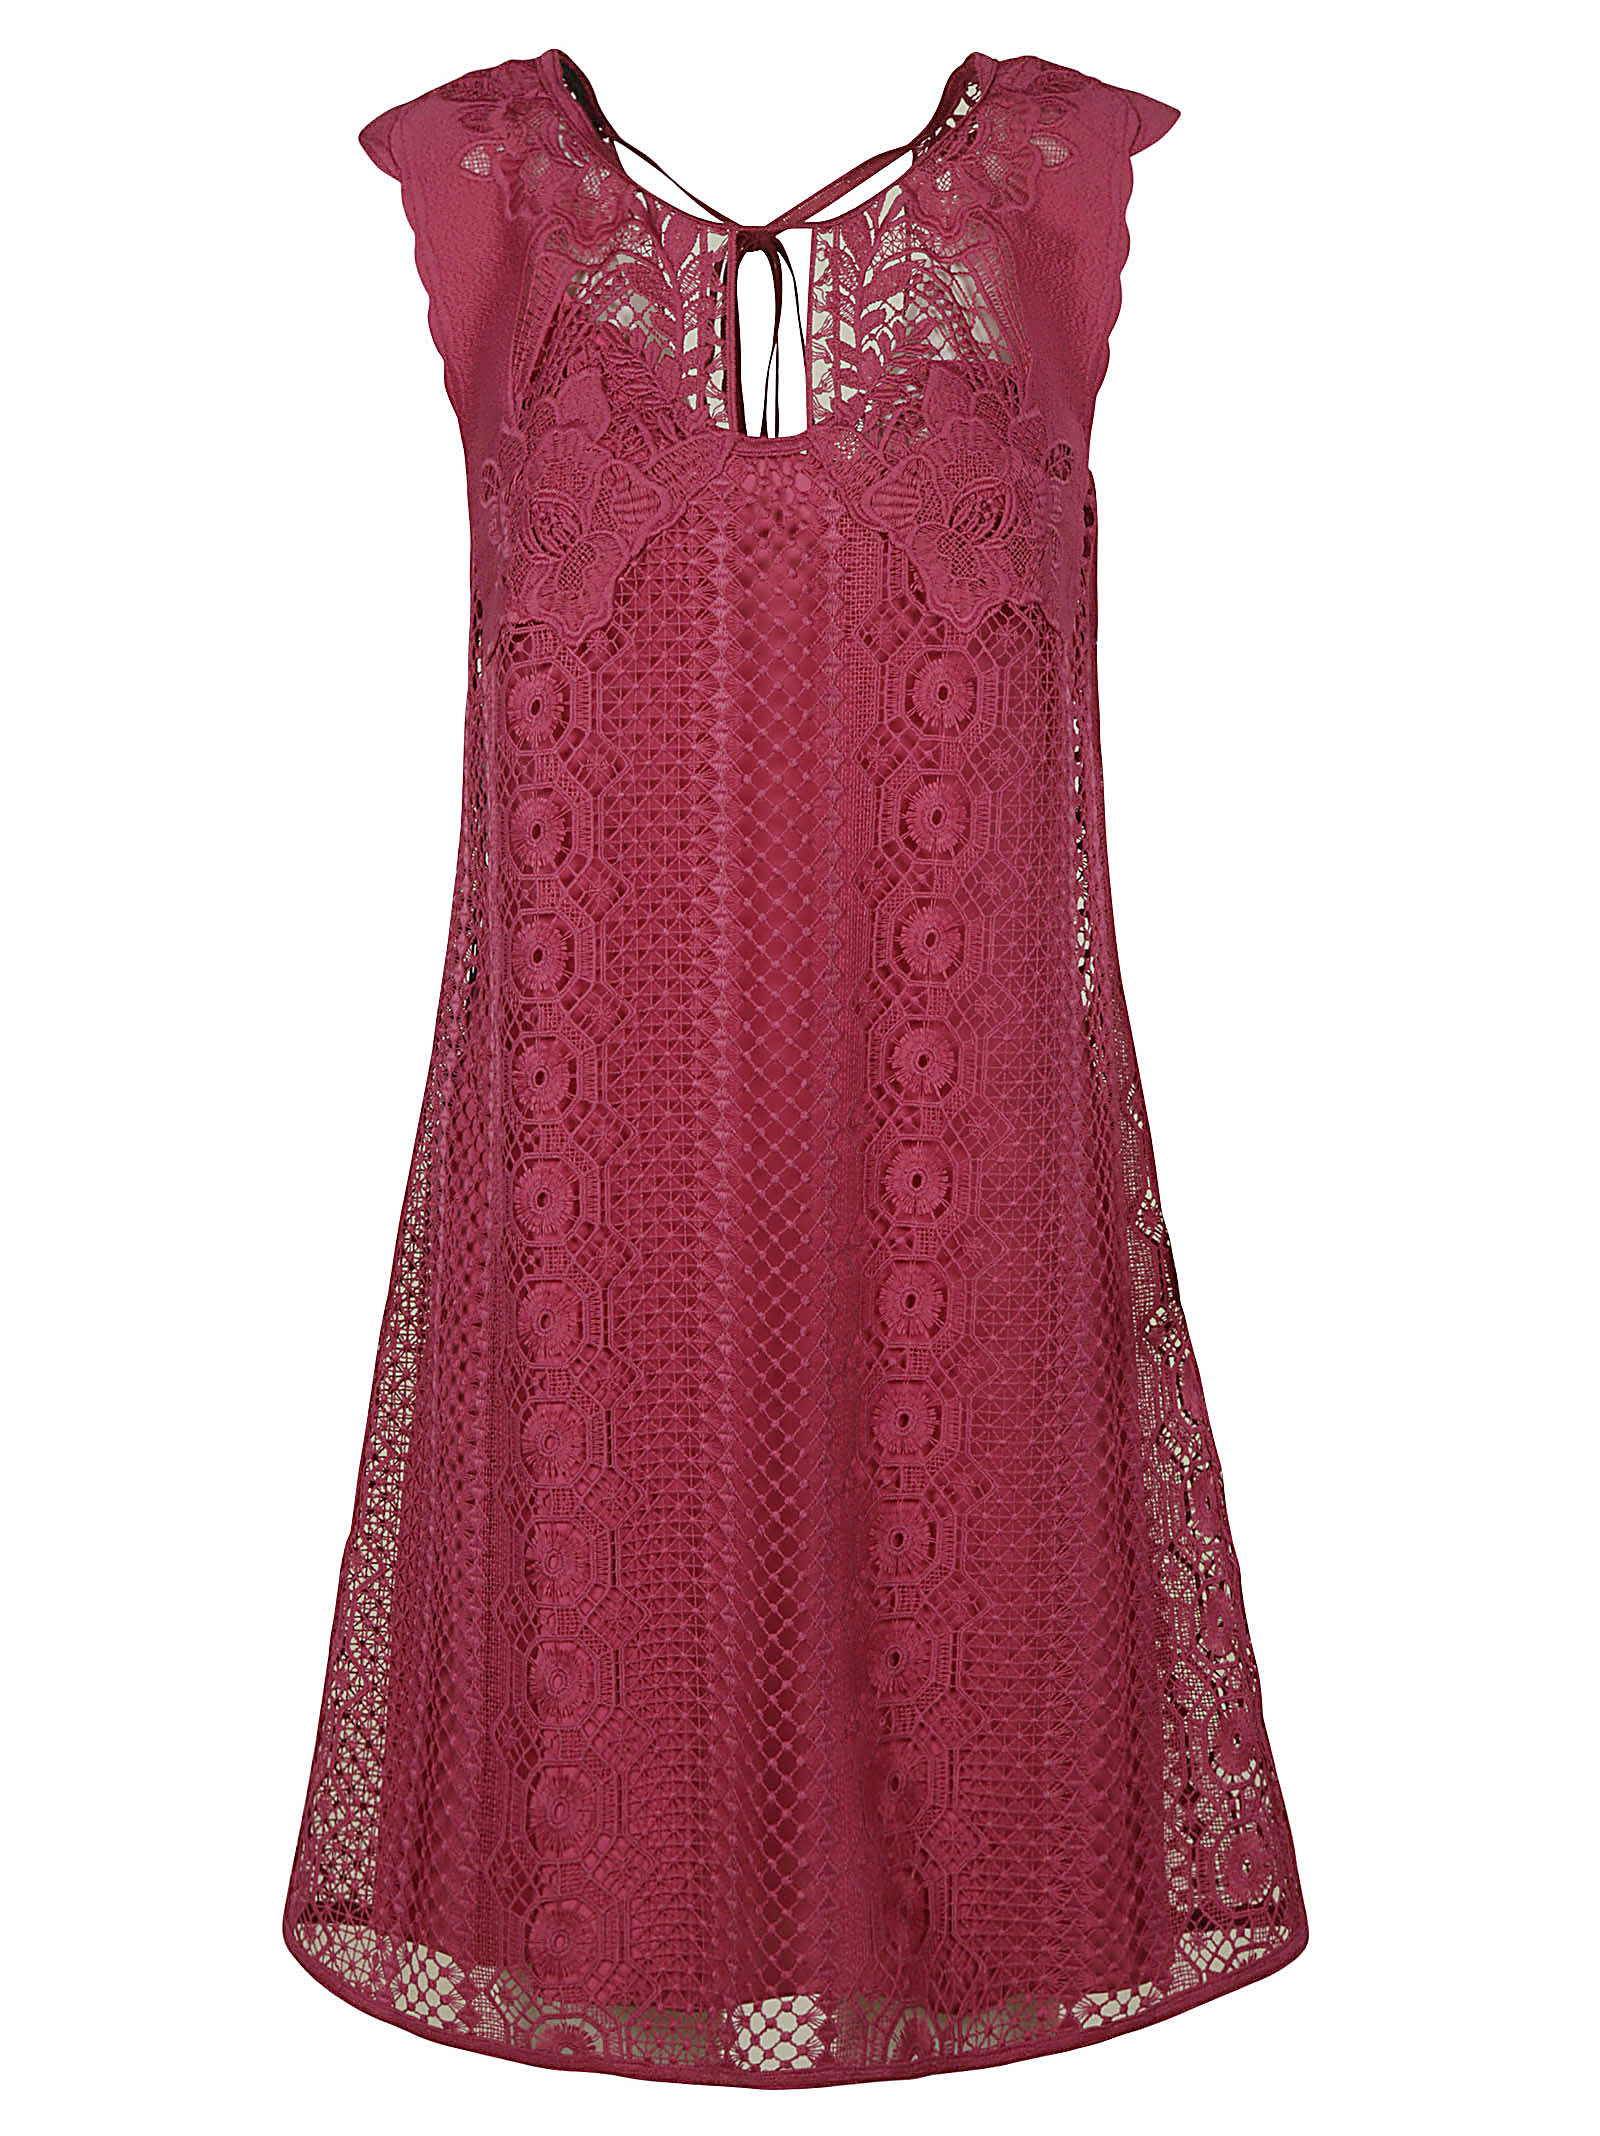 Alberta Ferretti Sleeveless Perforated Dress